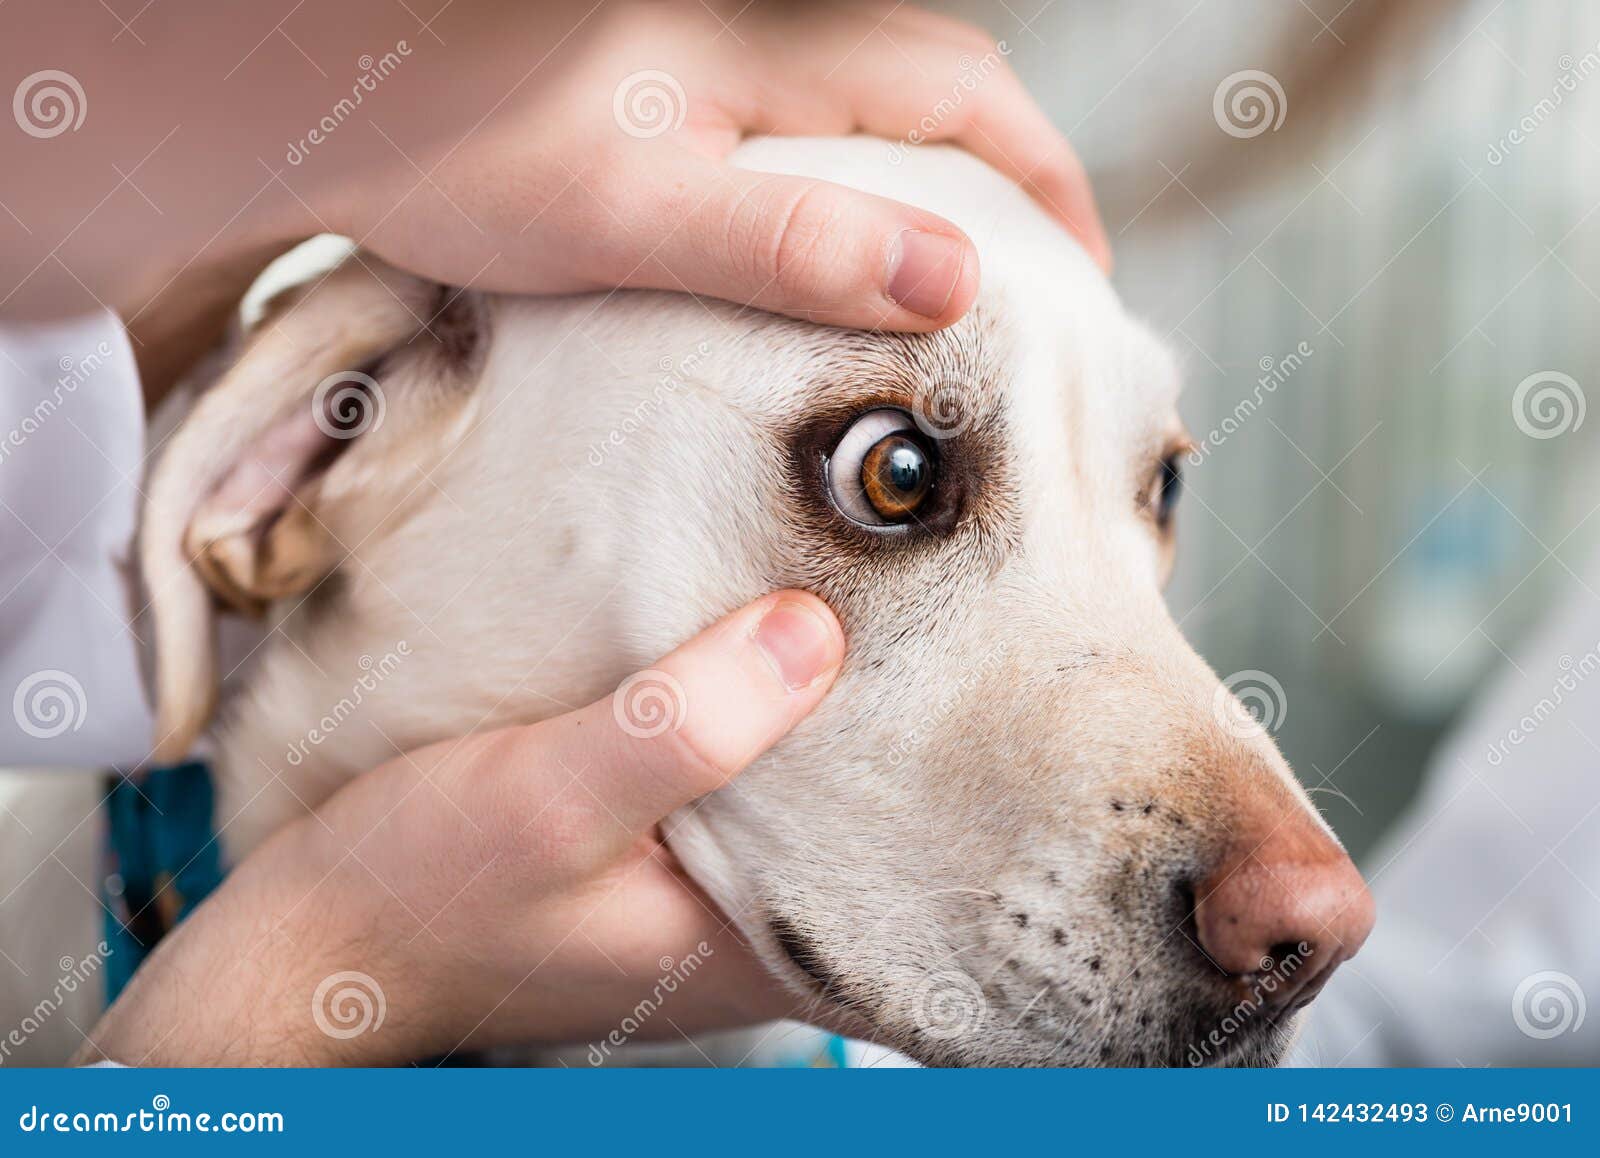 veterinarian checking dog`s eye